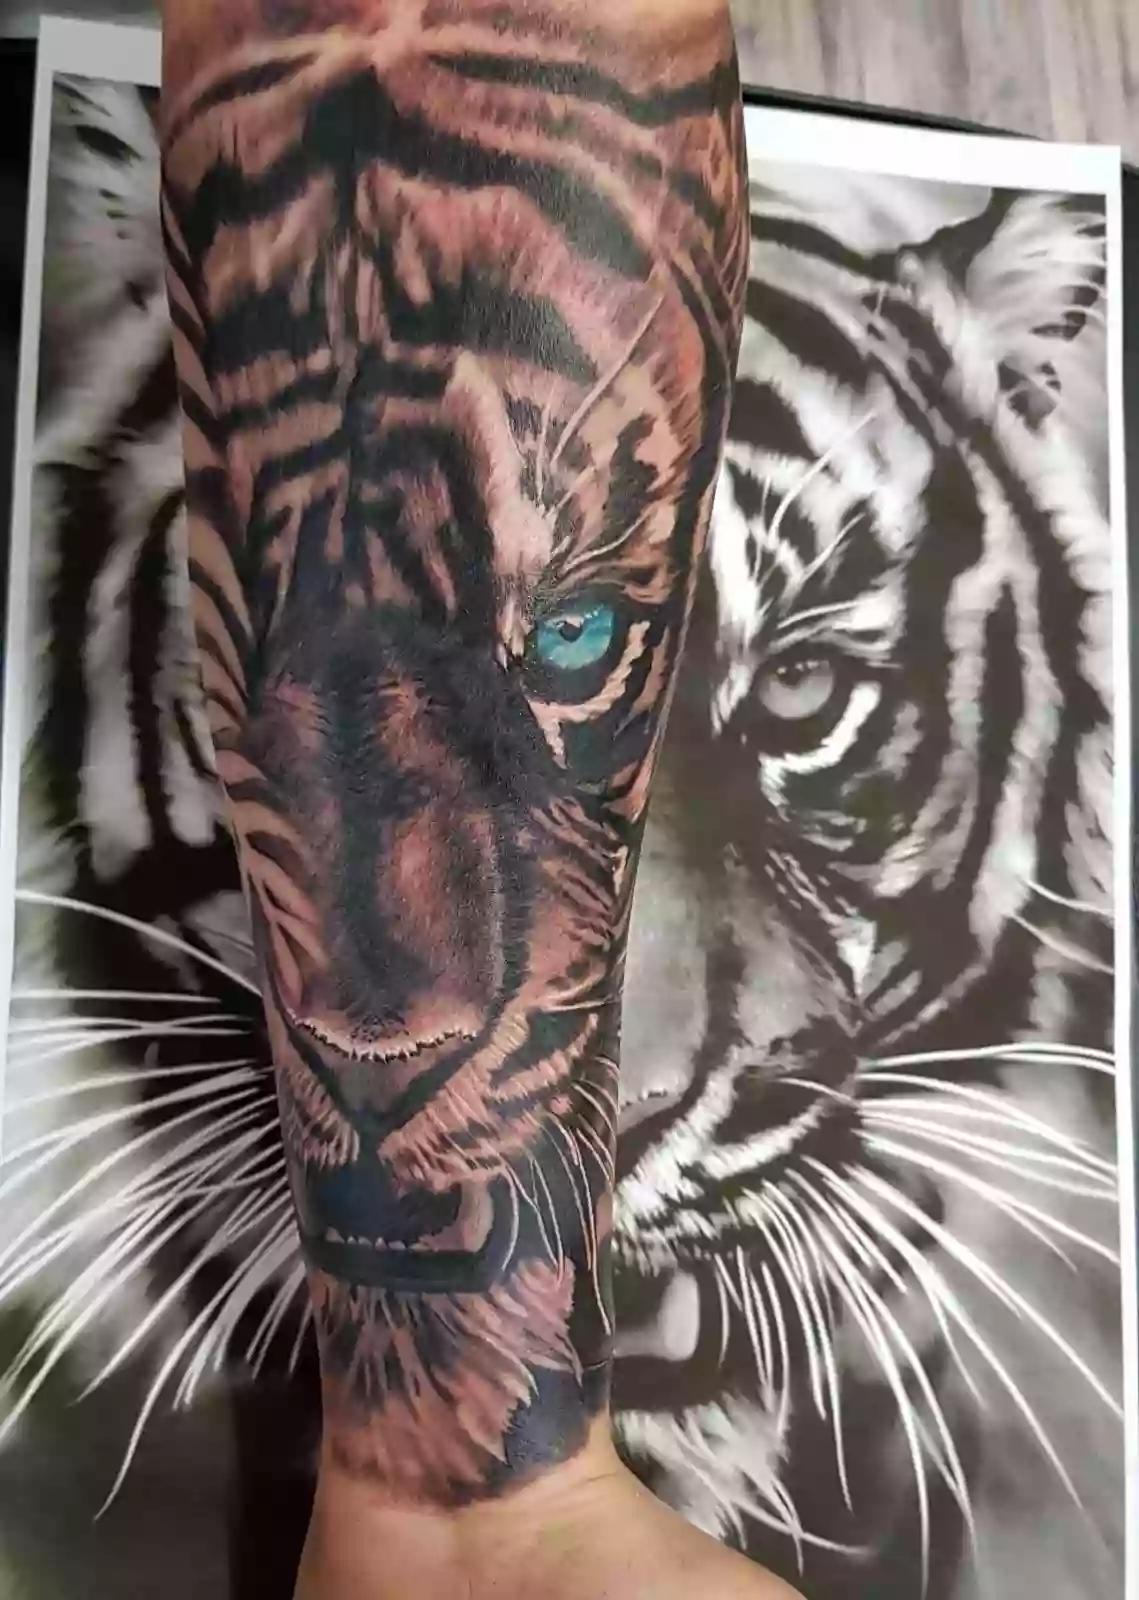 Face2Face Tattoo Studio - Cover Up Tattoo und Realistiche Tattoo, Fine Line Tattoo, Partner Tattoo, Kleine Tattoos